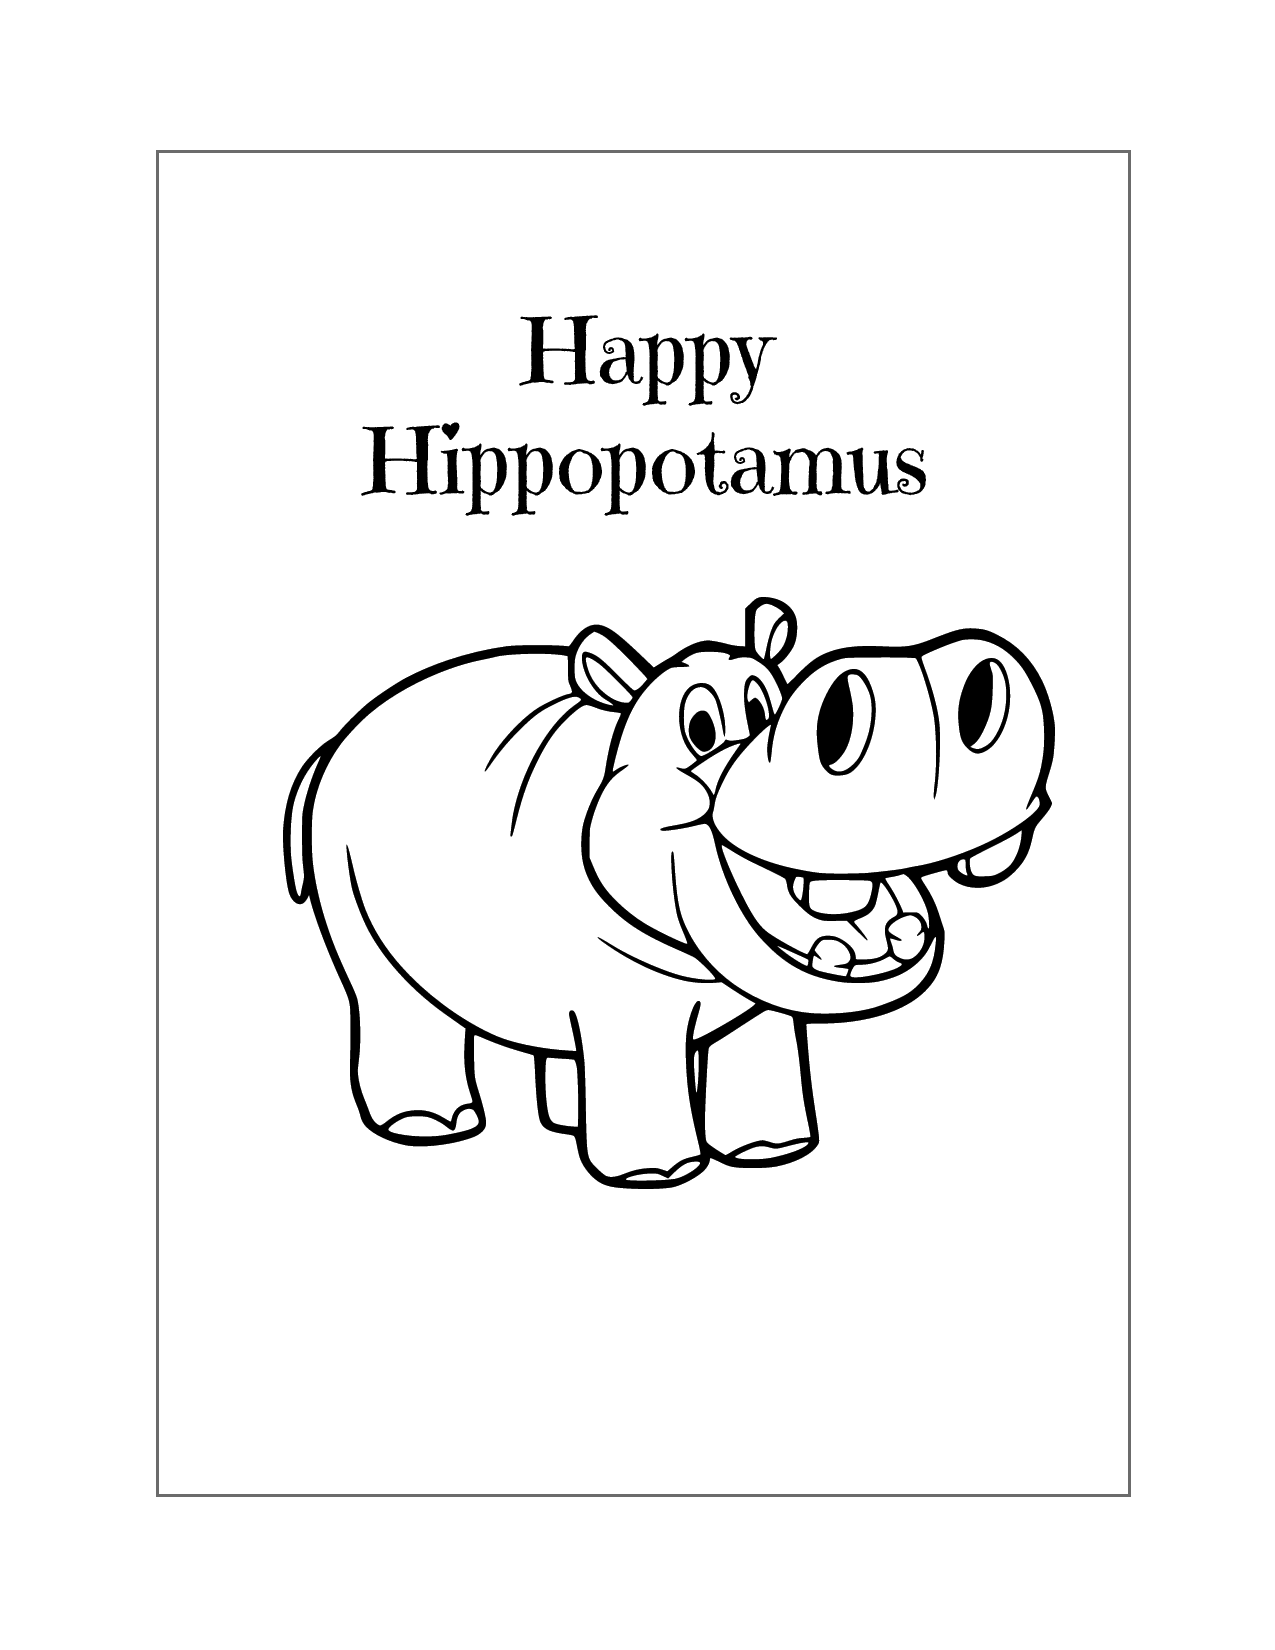 Happy Hippopotamus Coloring Page